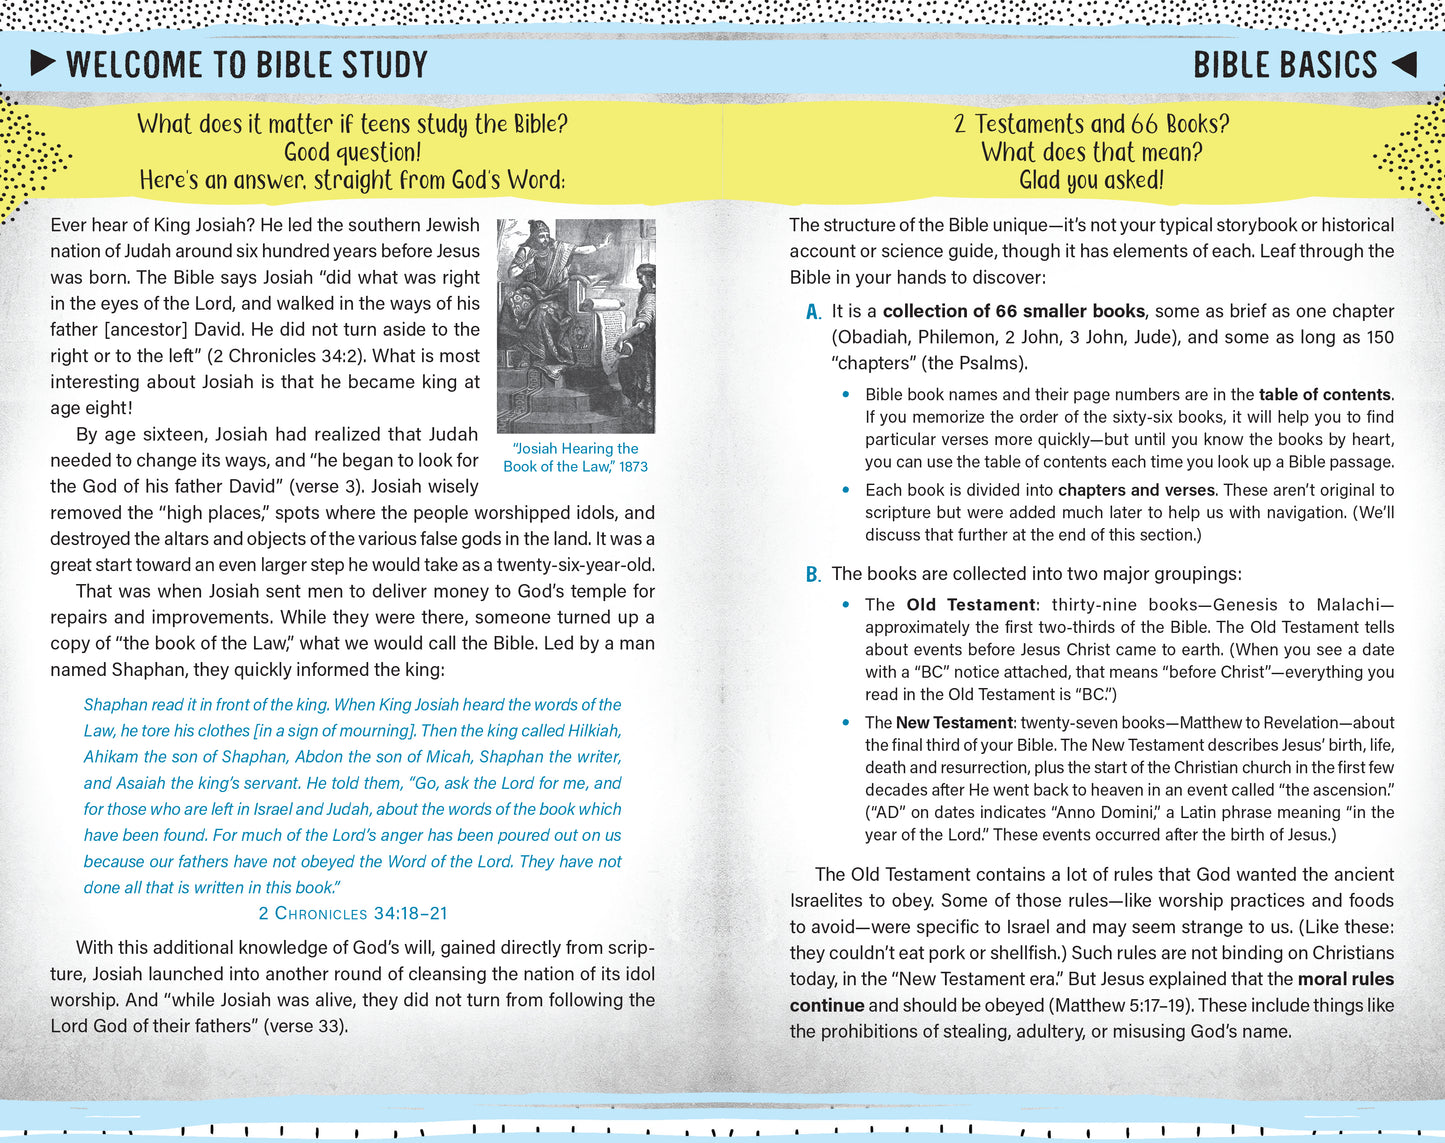 iAspire Teen Study Bible - The Christian Gift Company